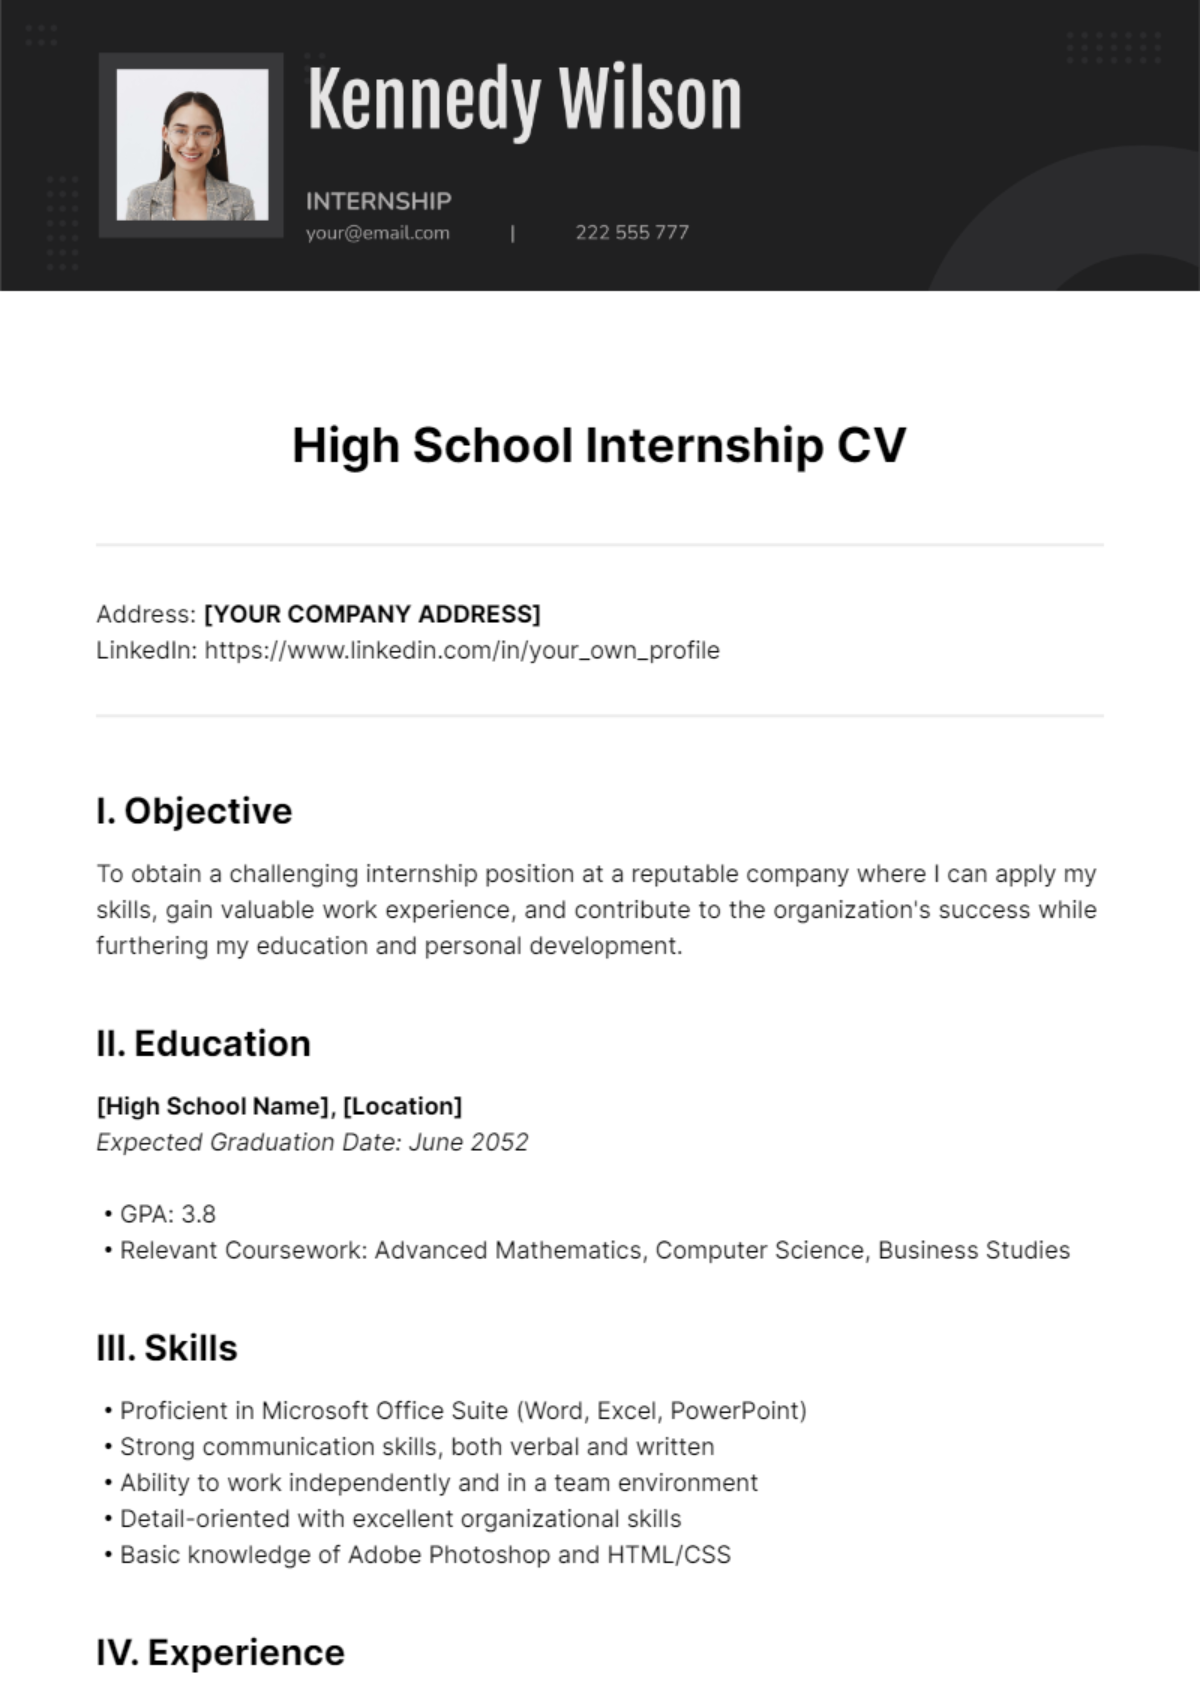 High School Internship CV Template